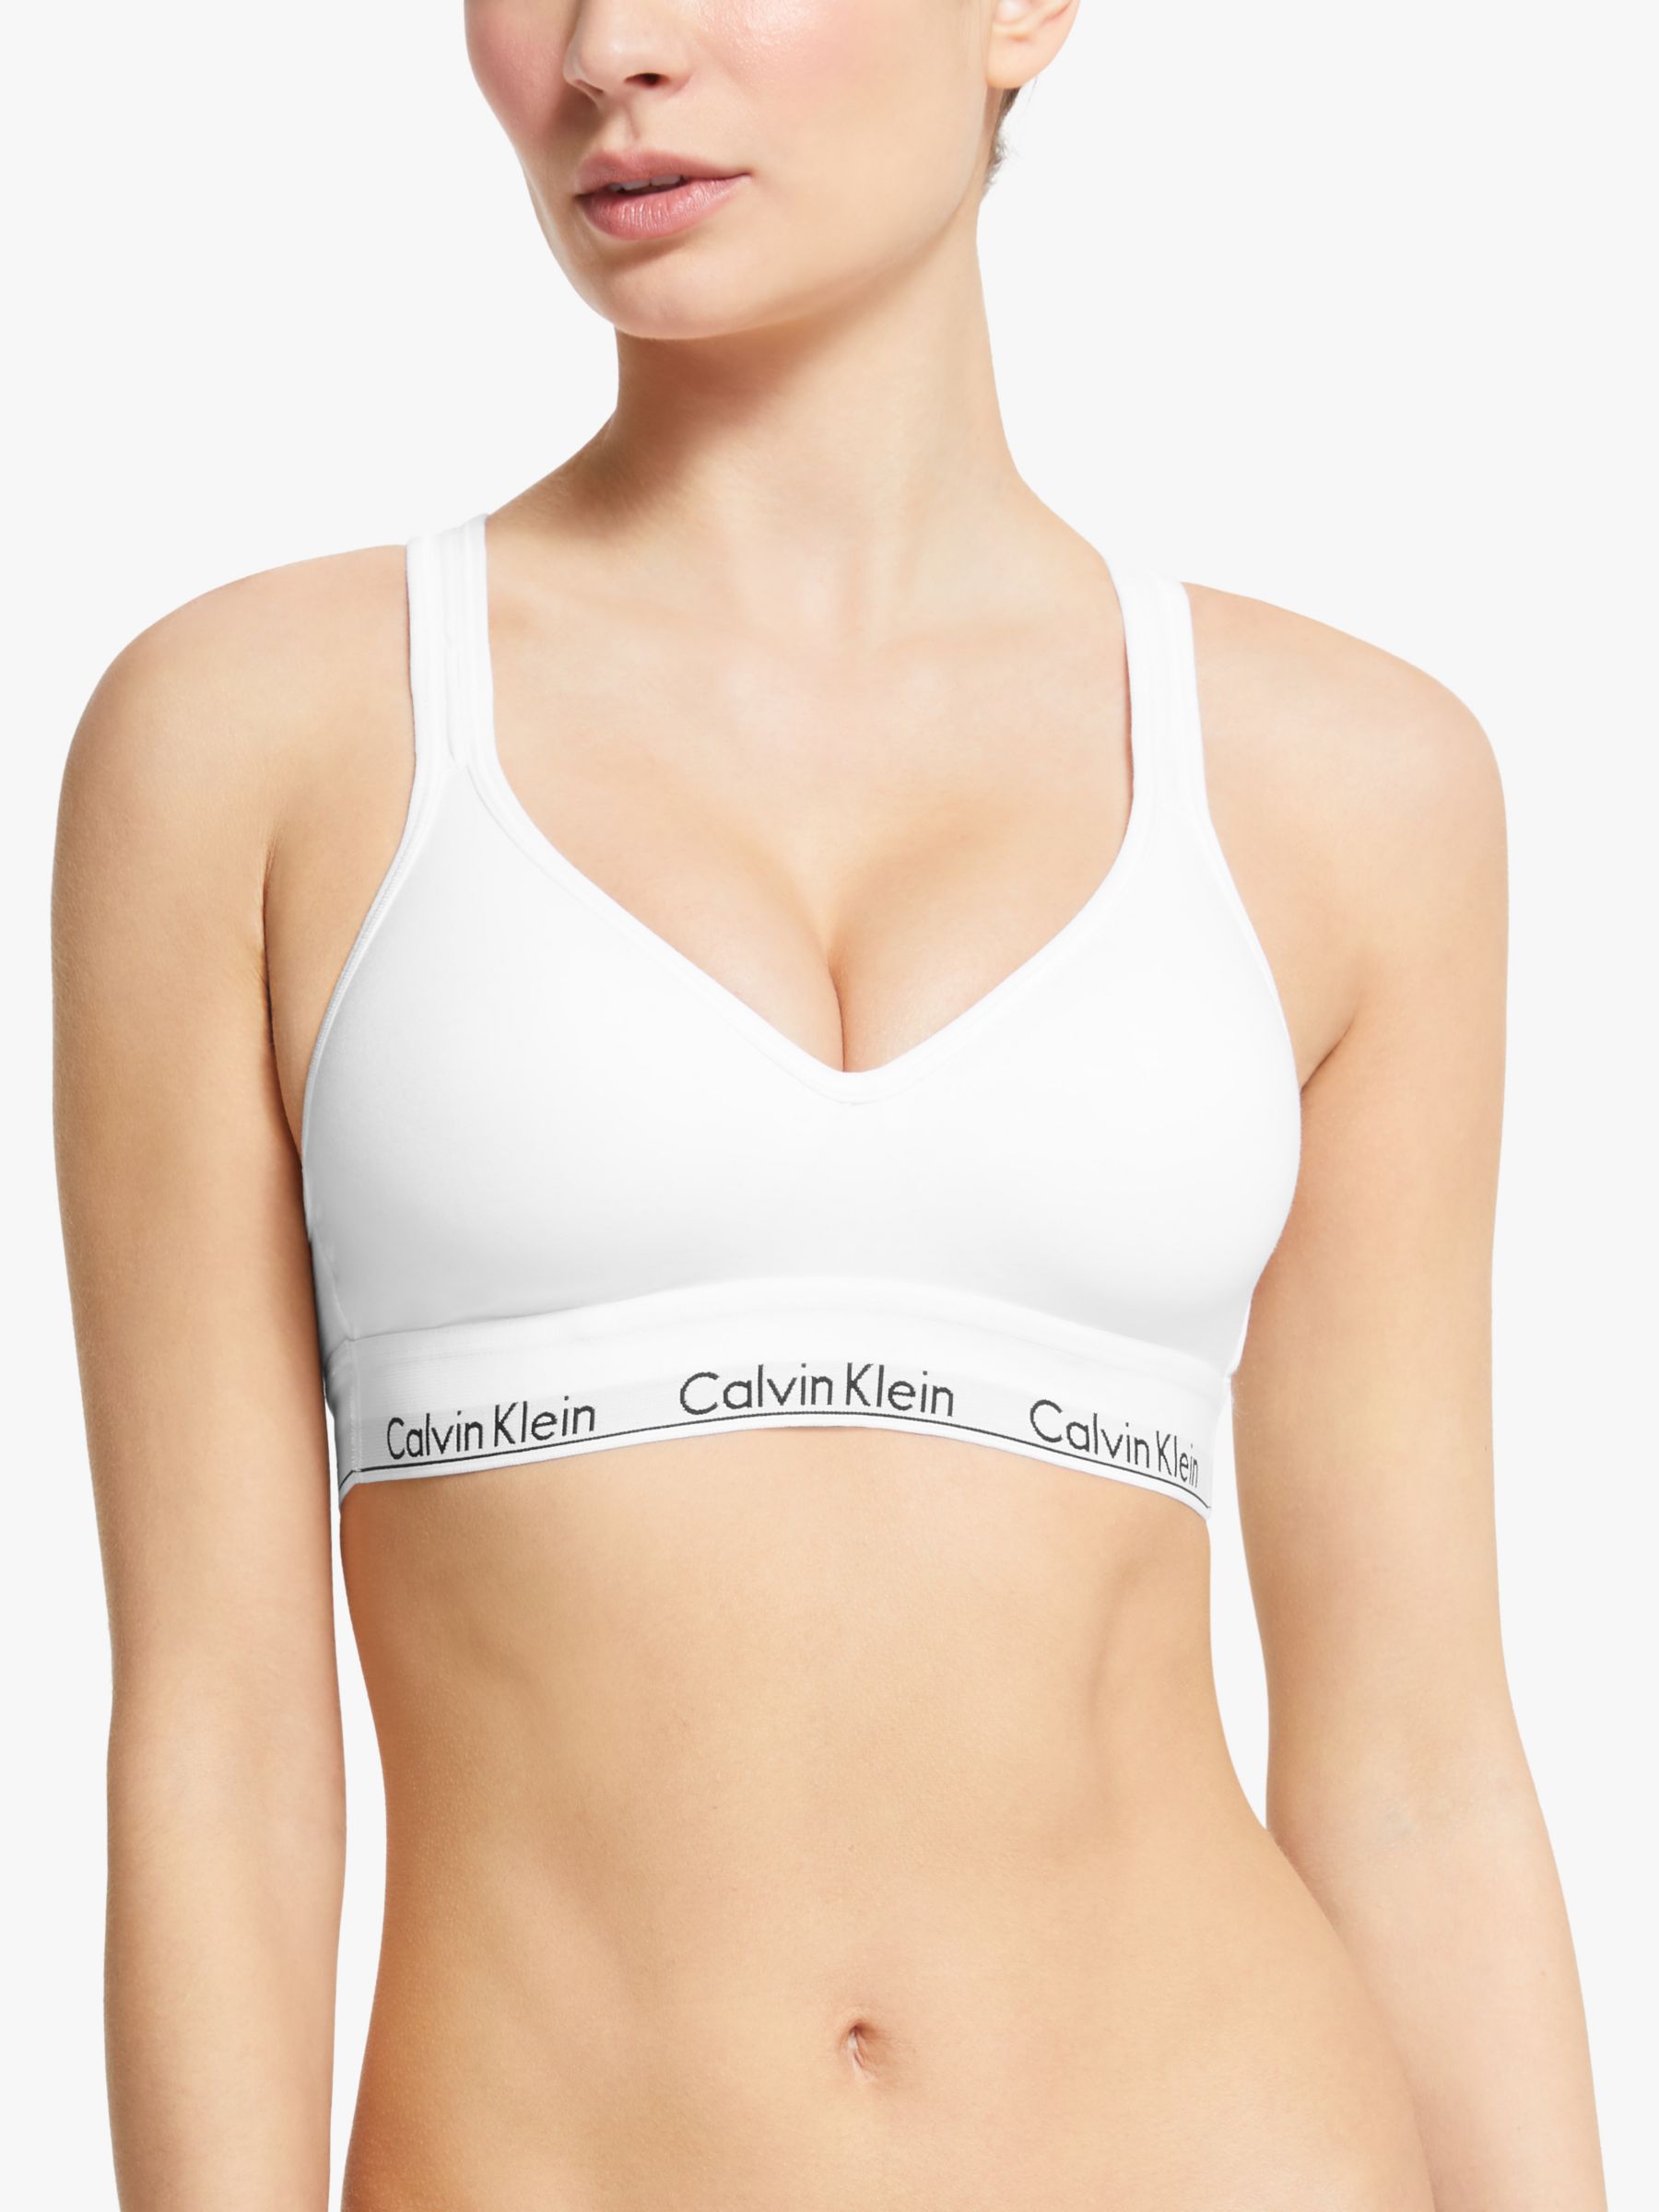 Calvin Klein Modern Cotton Cross Strap Lift Bralette, White, M